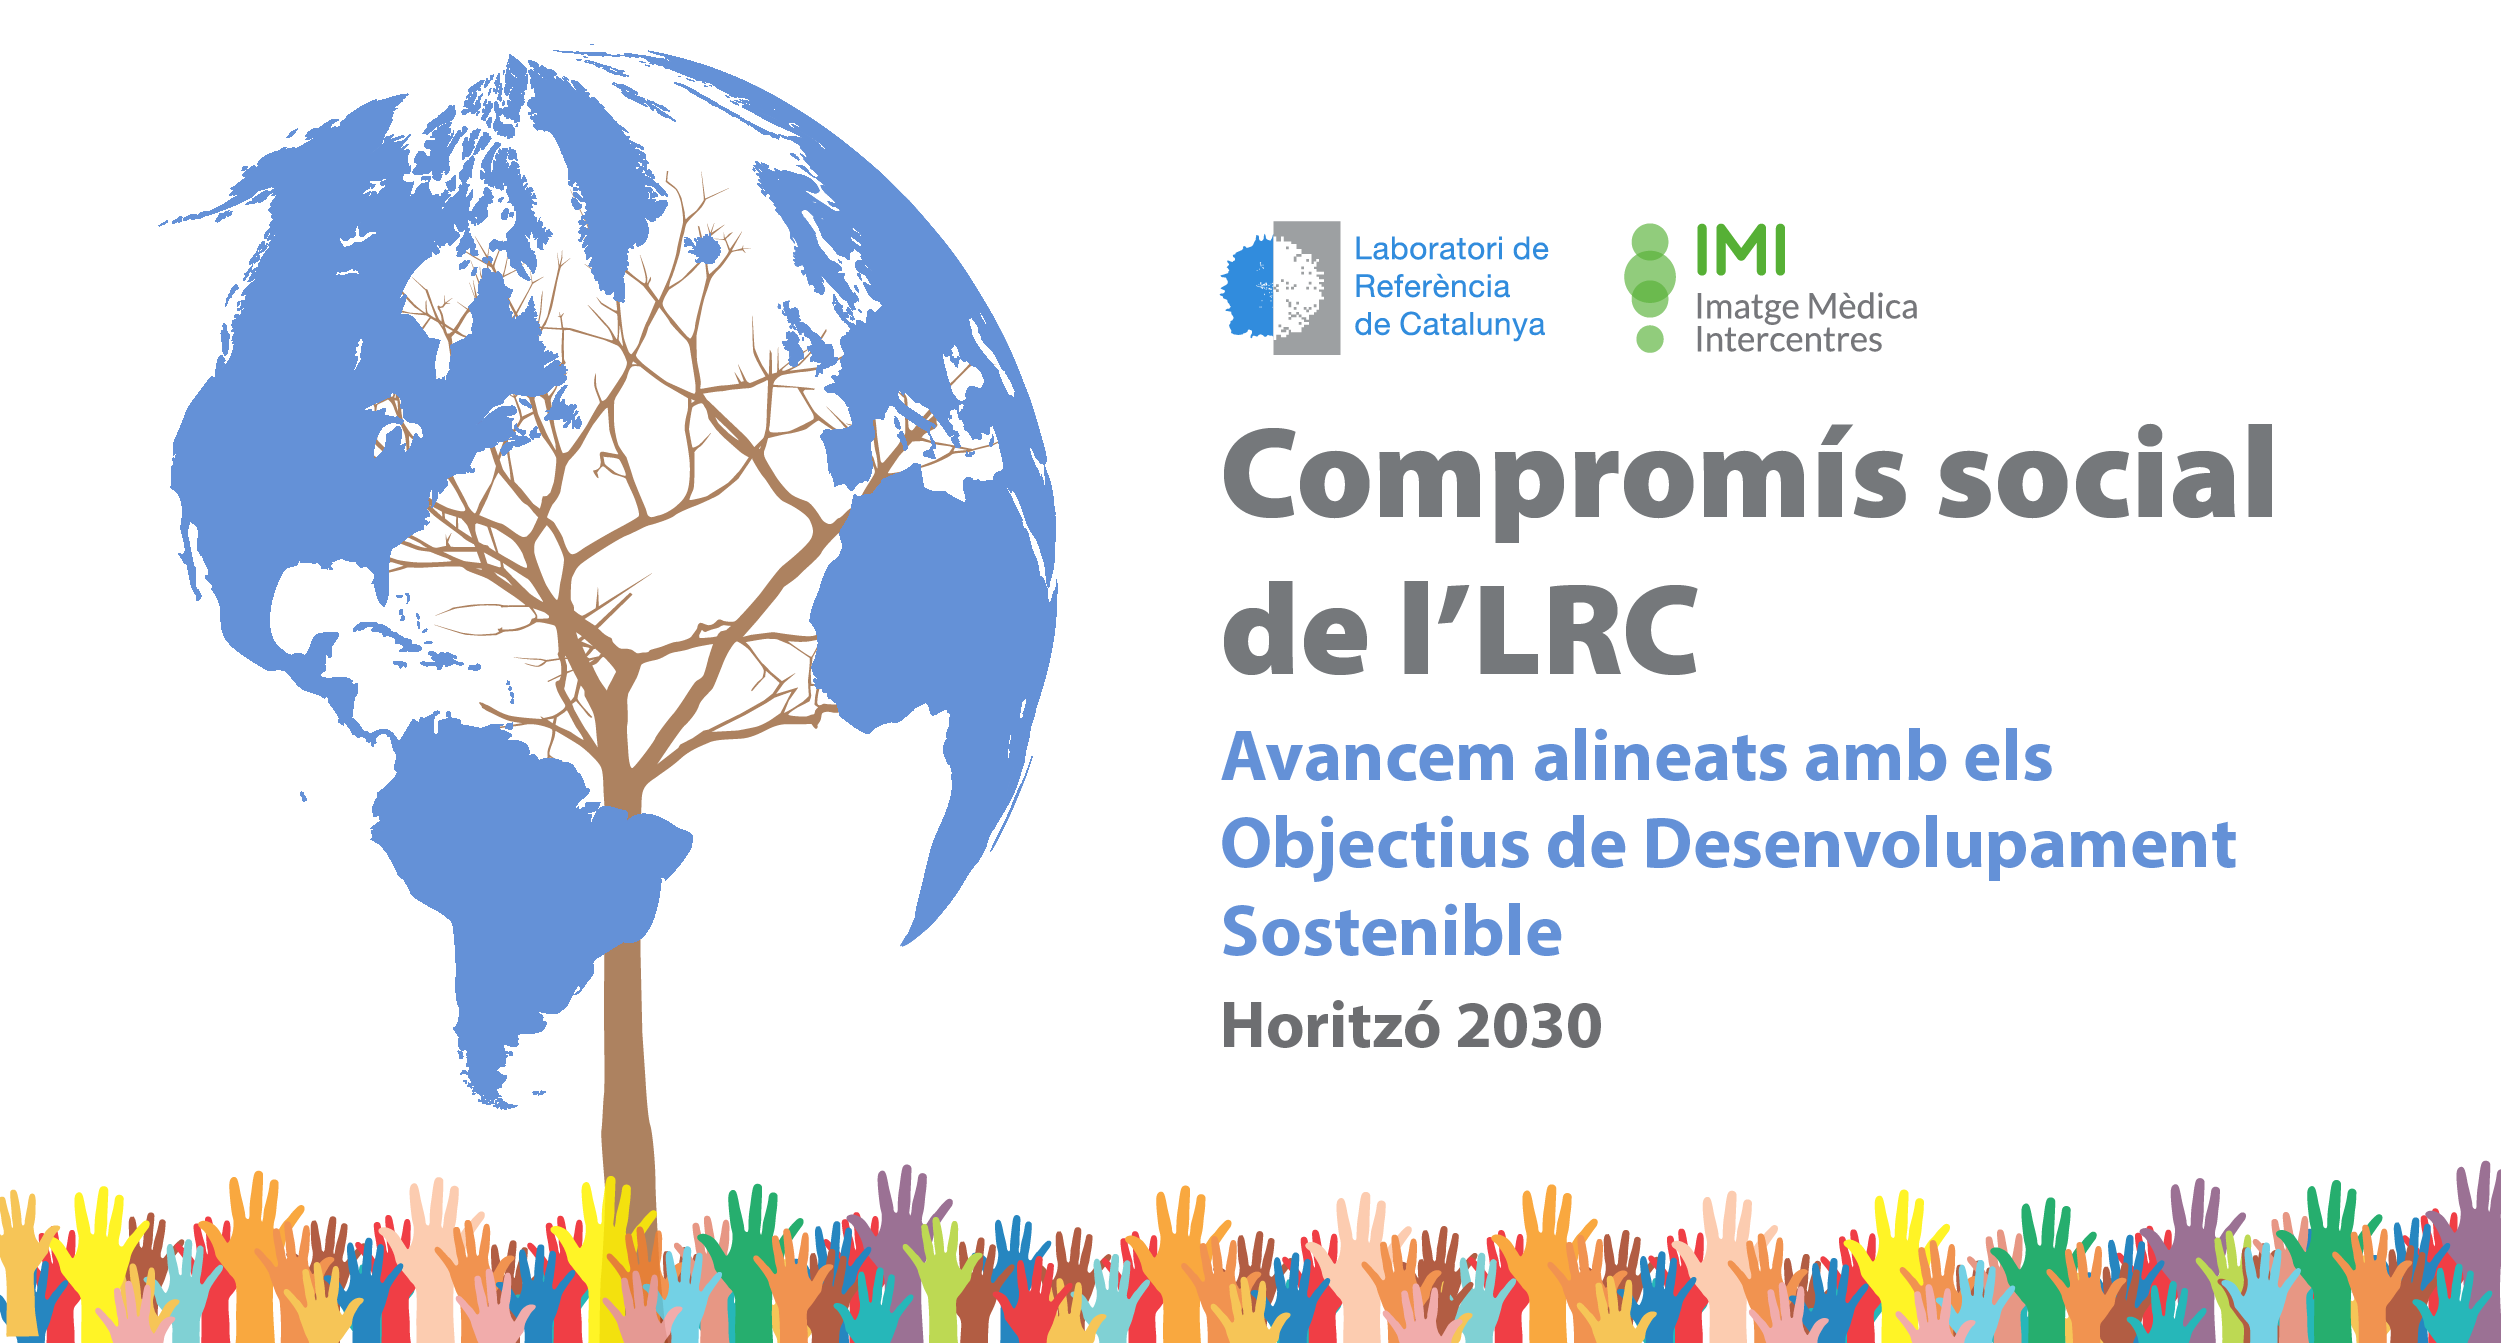 El compromiso social del LRC